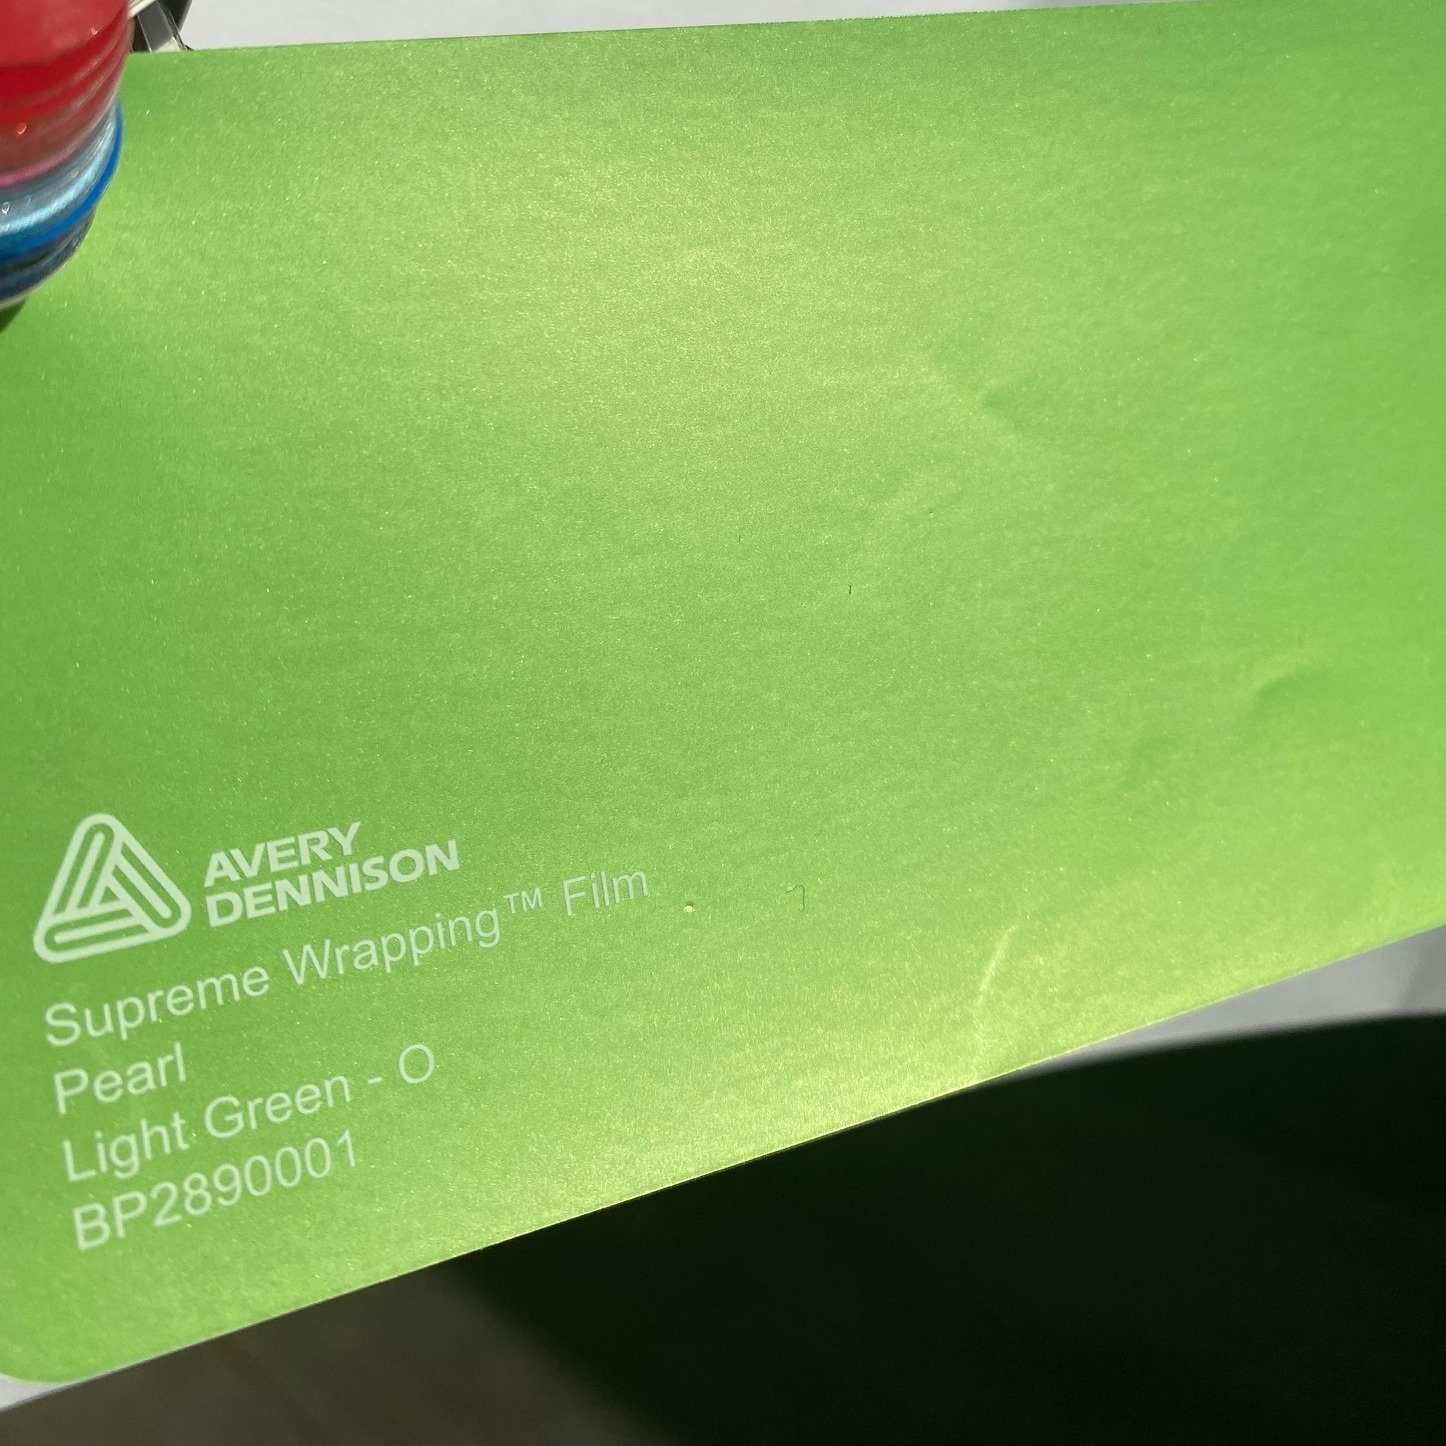 Avery Wrap papier perle vert clair O 1520mm